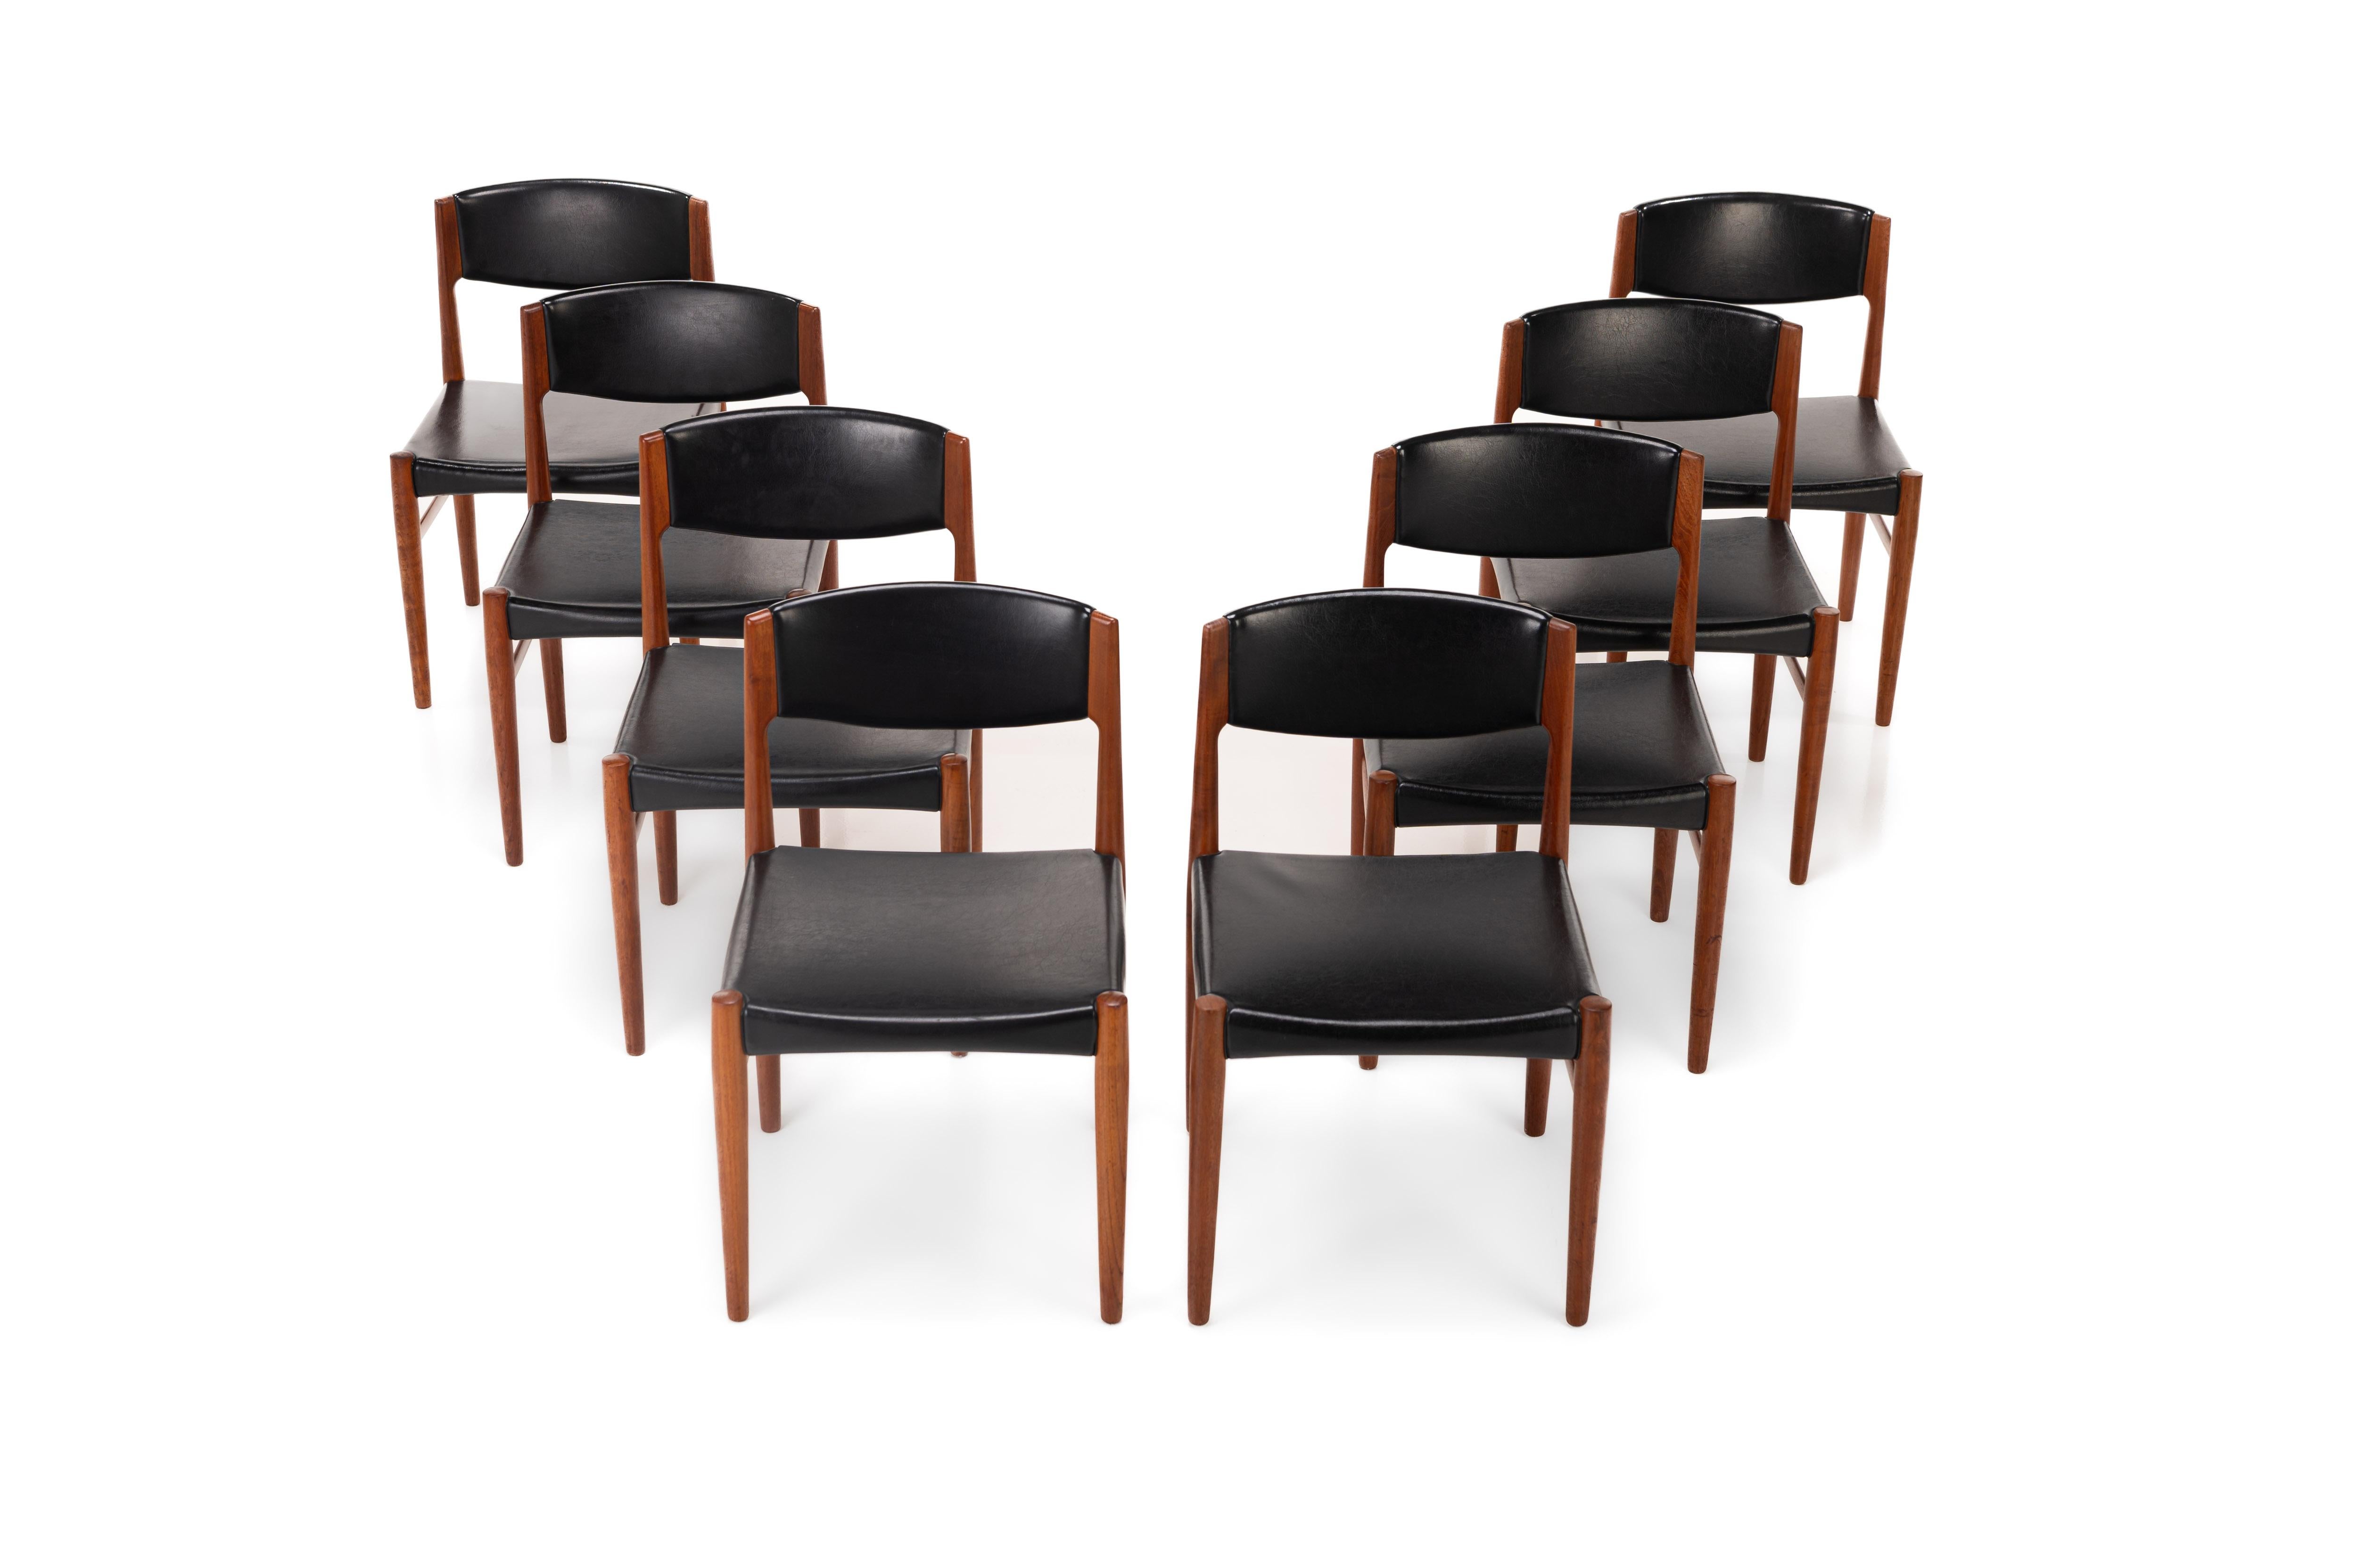 Scandinavian Modern Set of 8 Dining Chairs by Grete Jalk for Glostrup Møbelfabrik, Denmark, 1960s